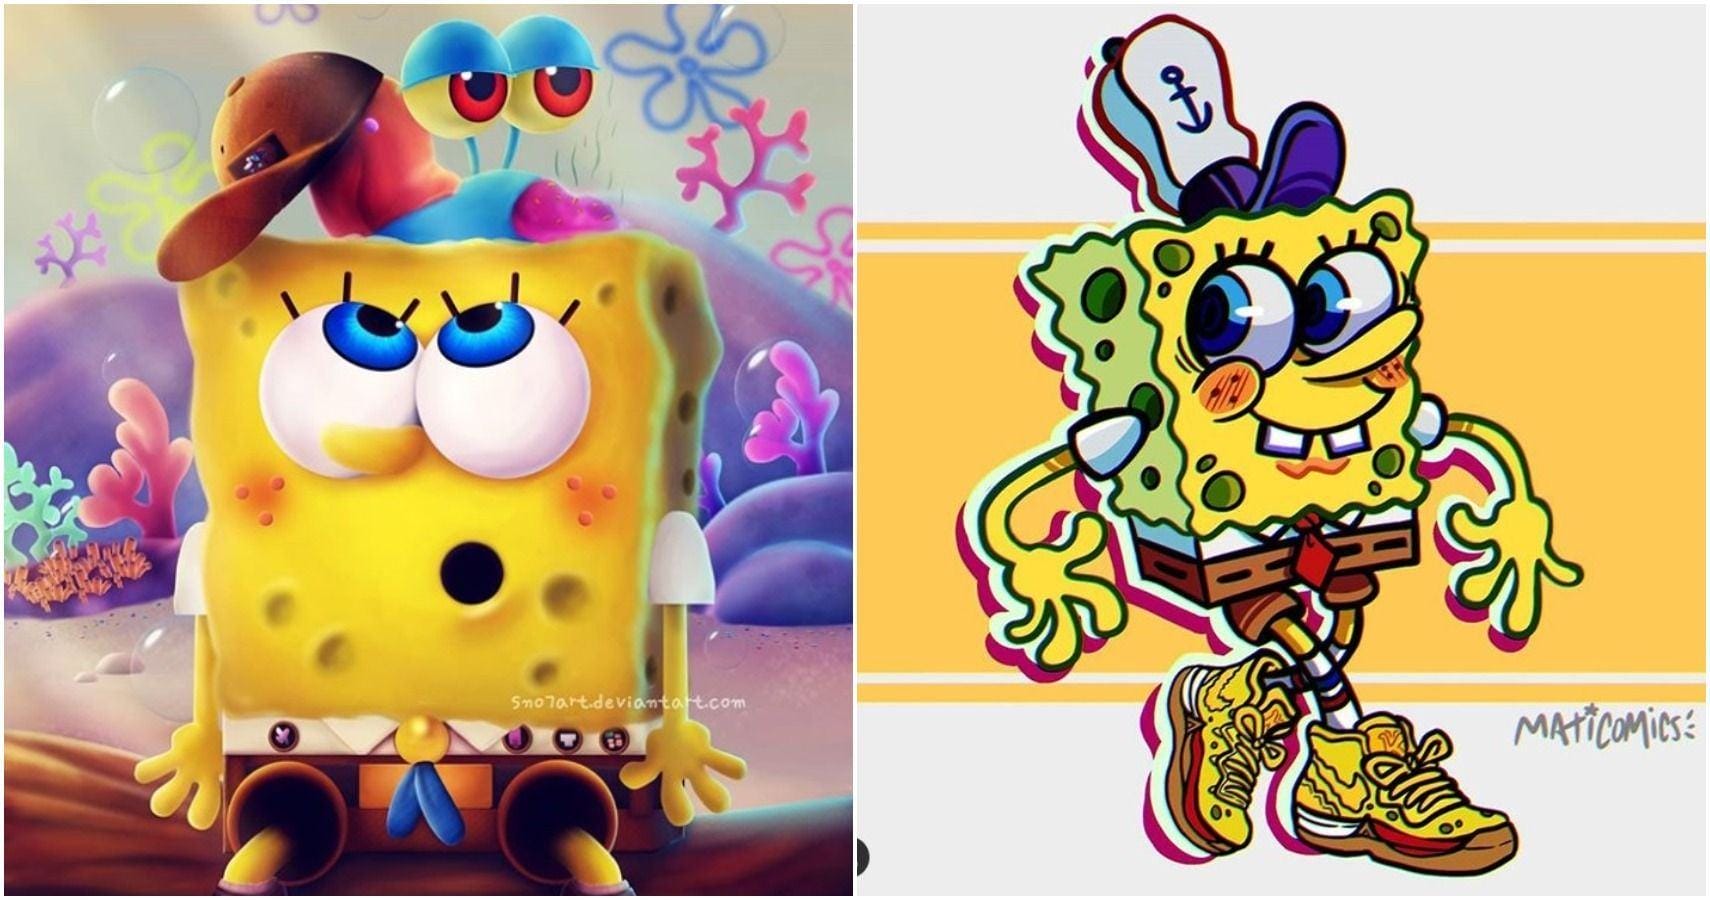 SpongeBob SquarePants: 10 Fan Art Pieces Of SpongeBob That Are Awesome